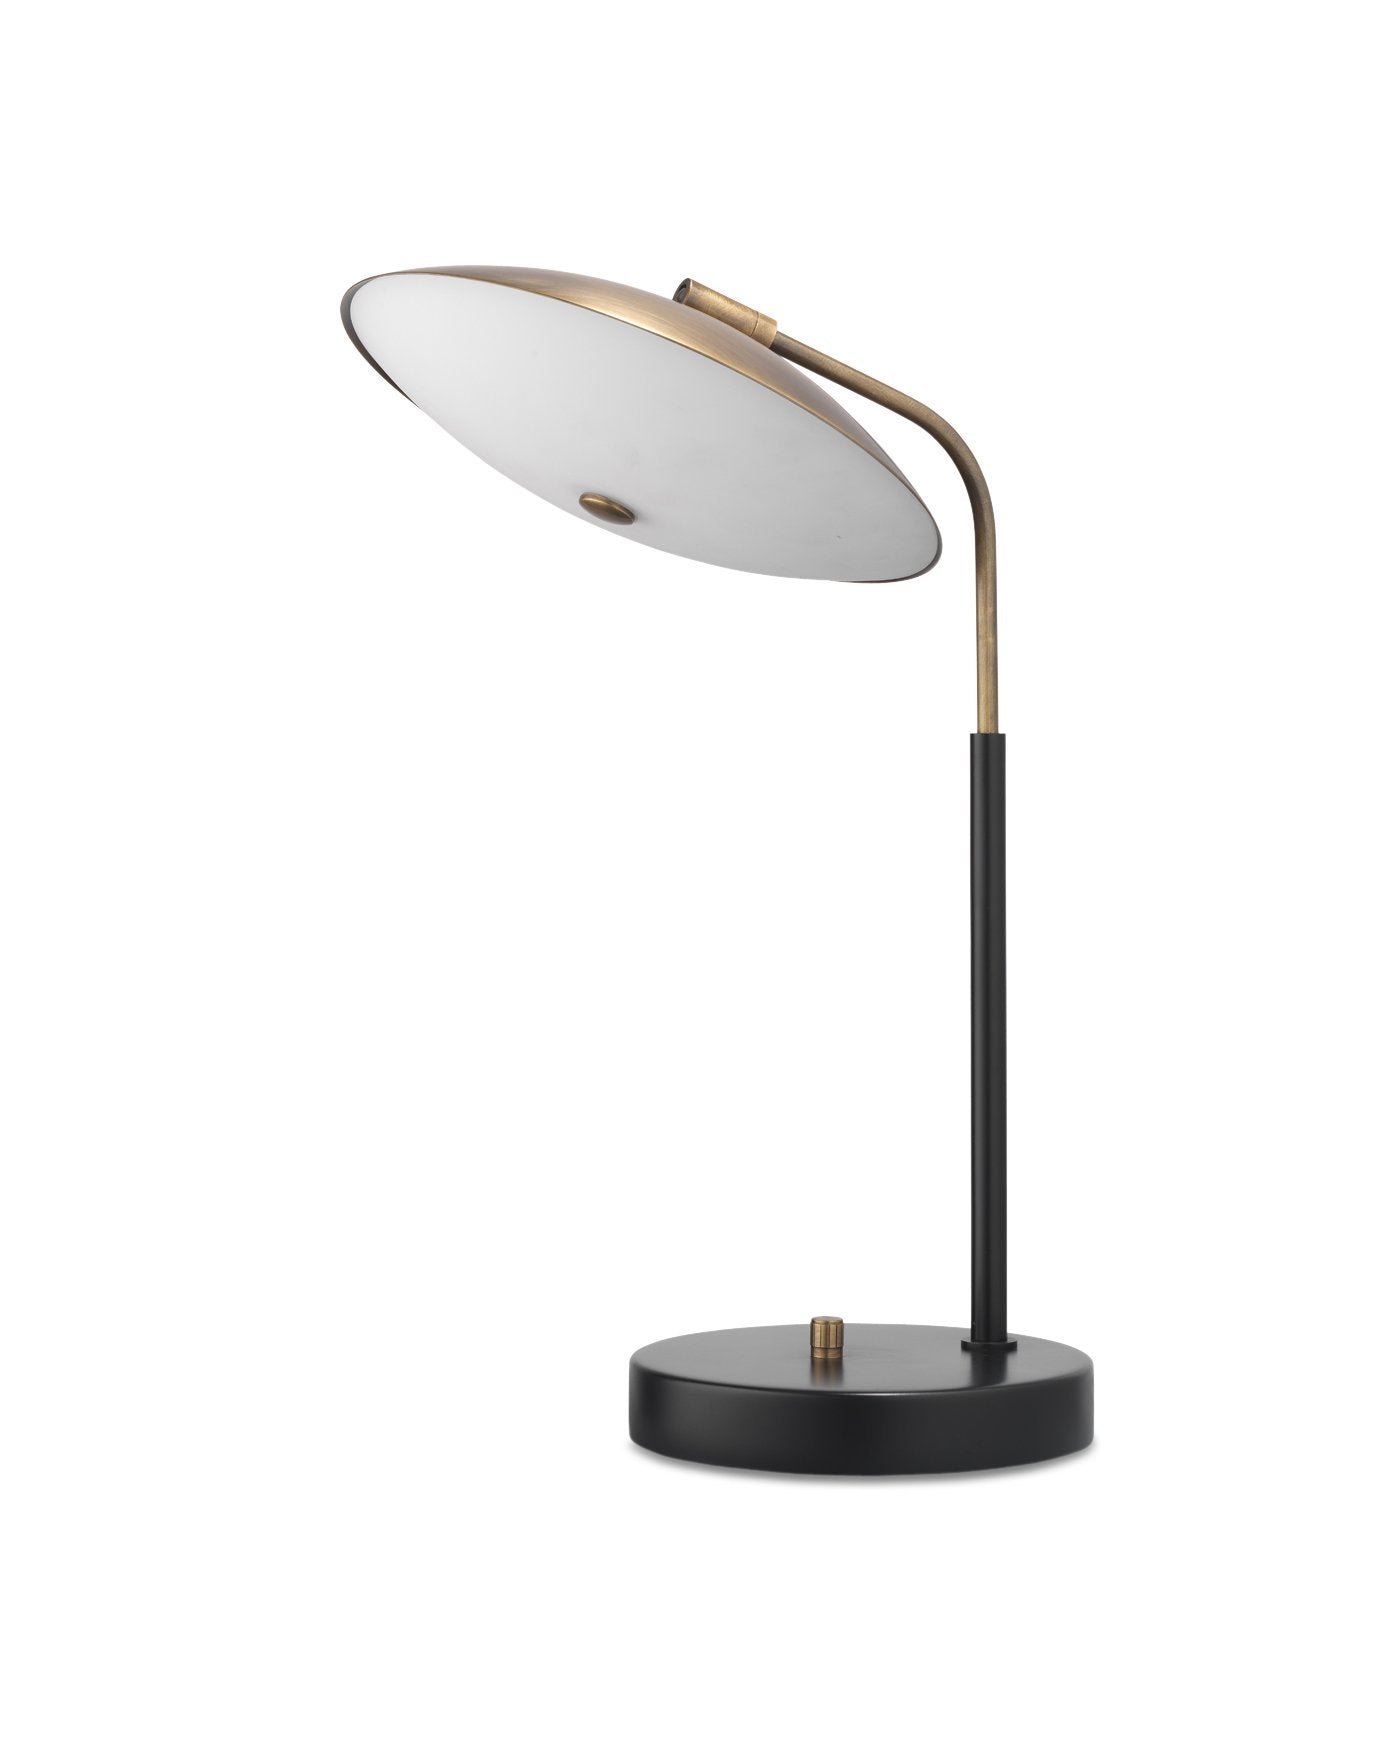 Marvin Desk Lamp